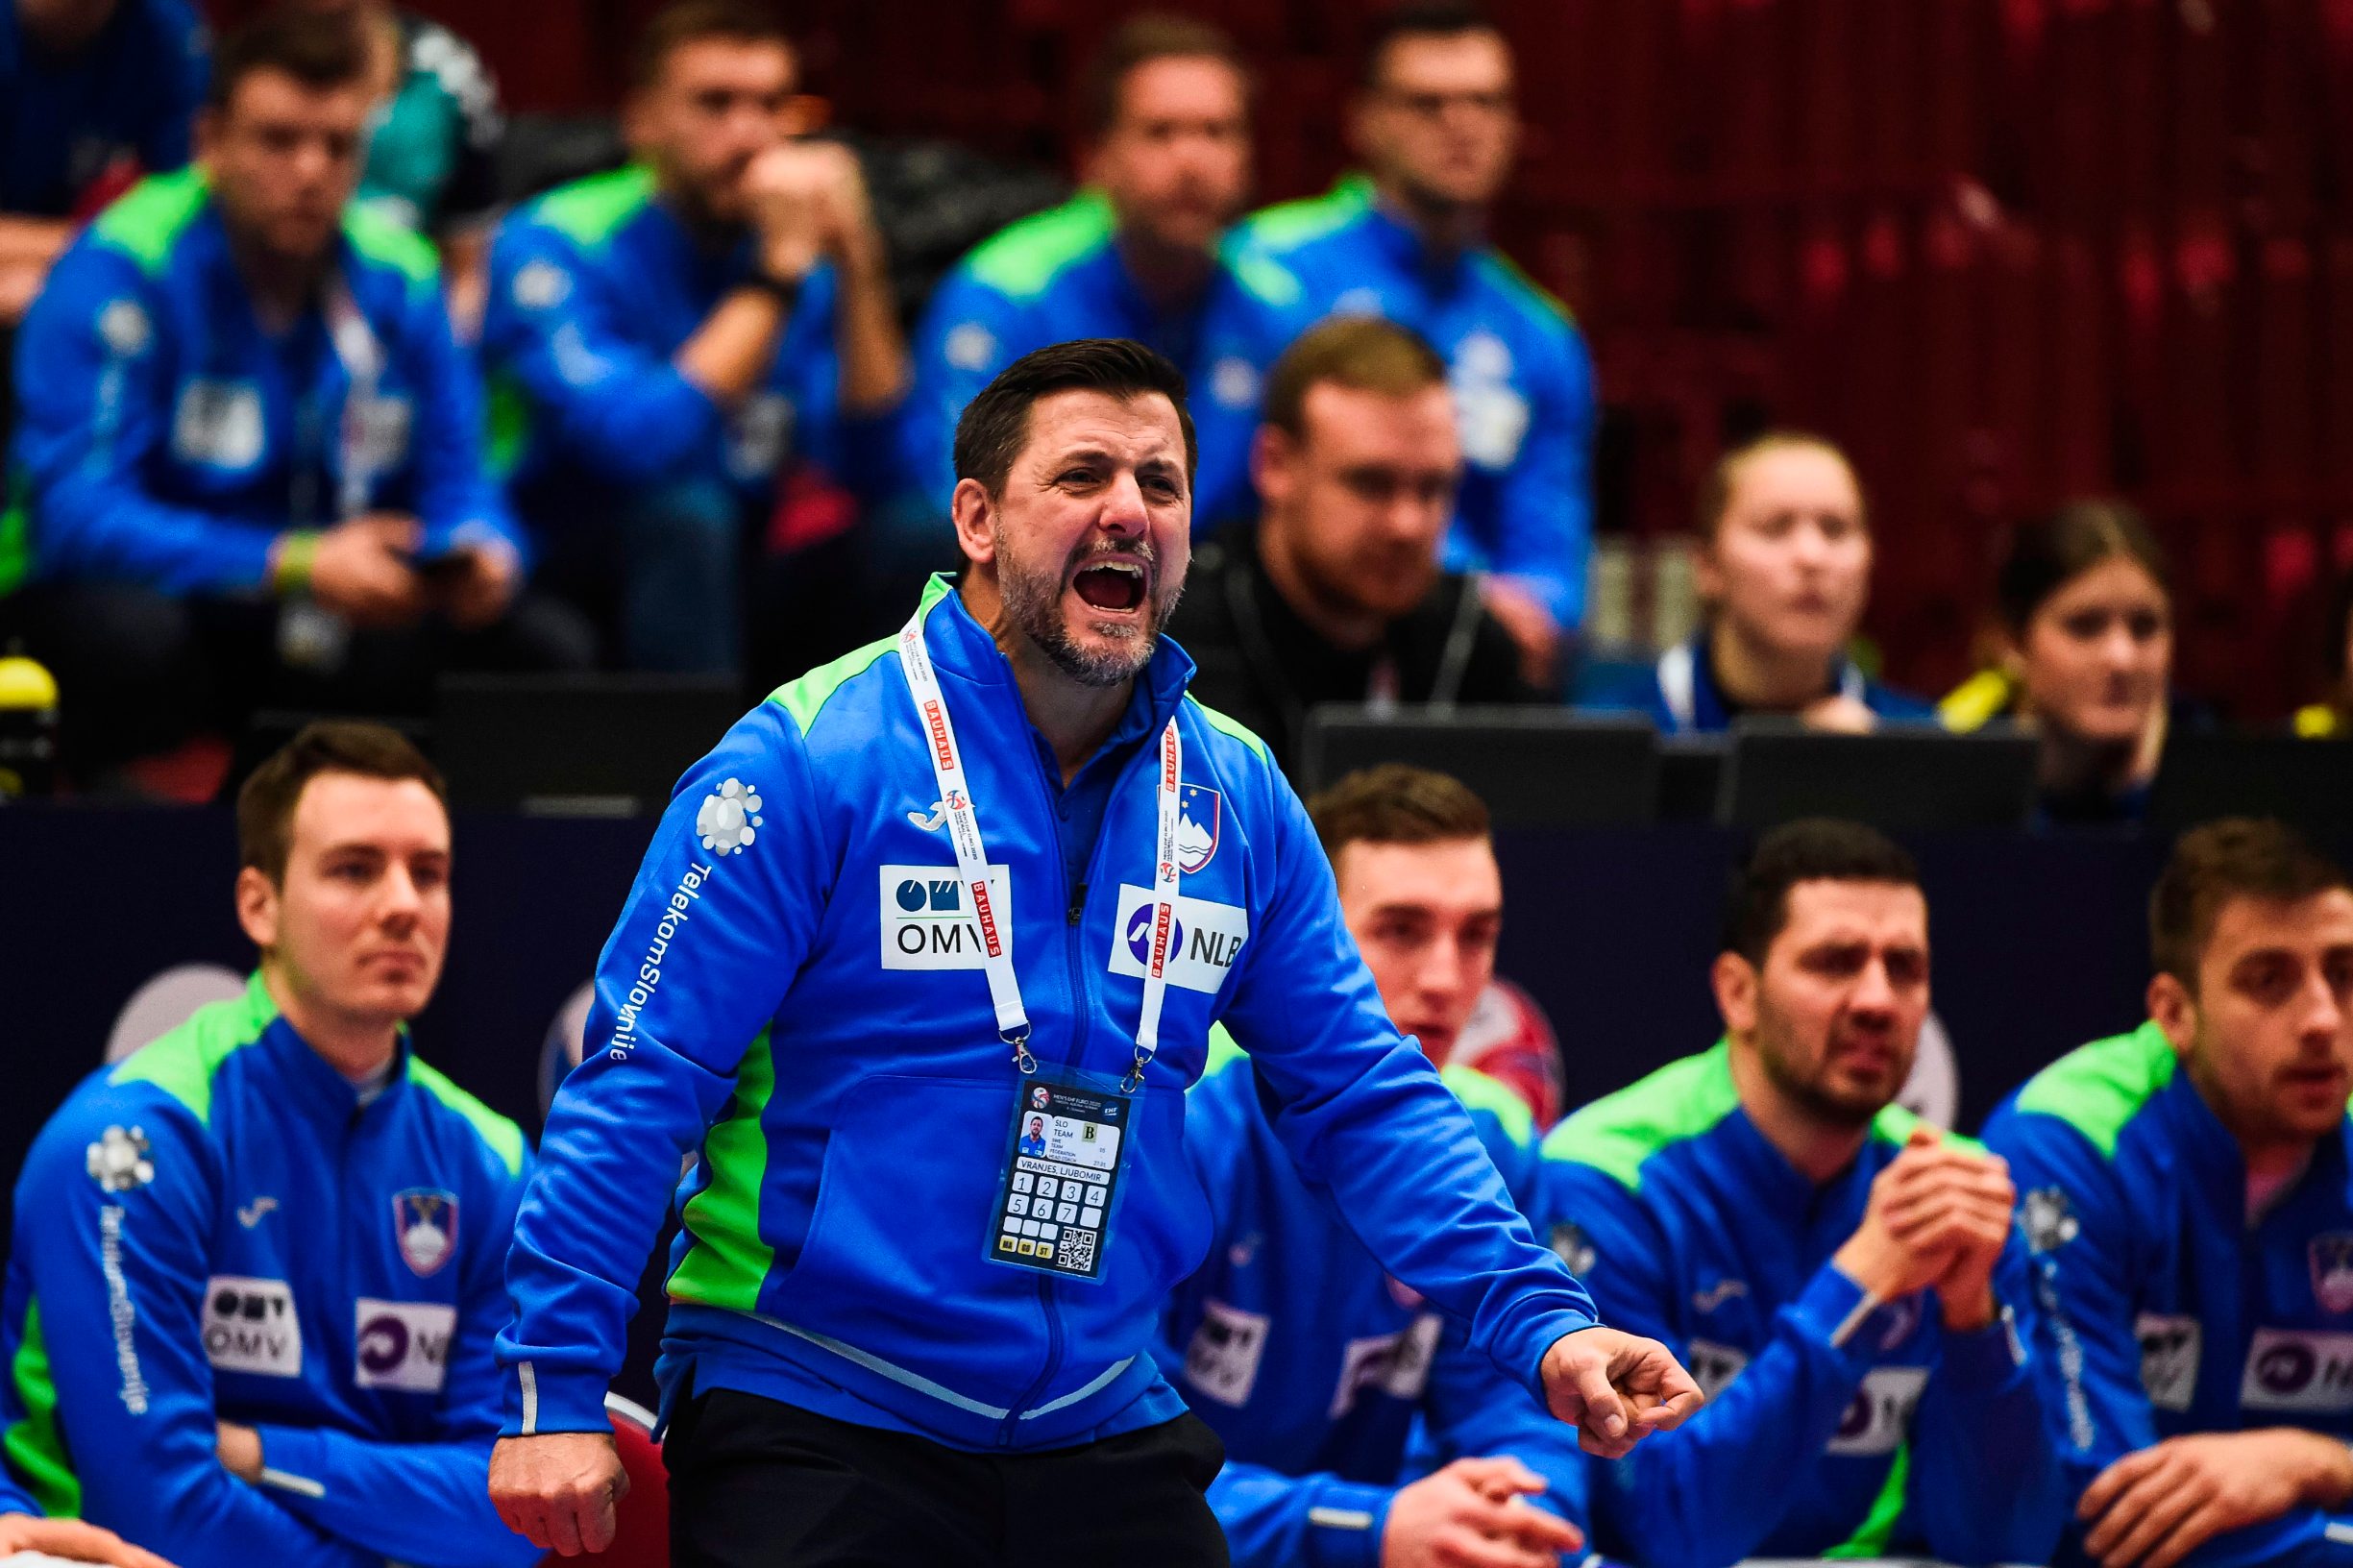 Slovenia's head coach Ljubomir Vranjes reacts during the Men's European Handball Championship, main round match between Slovenia and Hungary in Malmoe, Sweden on January 19, 2020. (Photo by Jonathan NACKSTRAND / AFP)